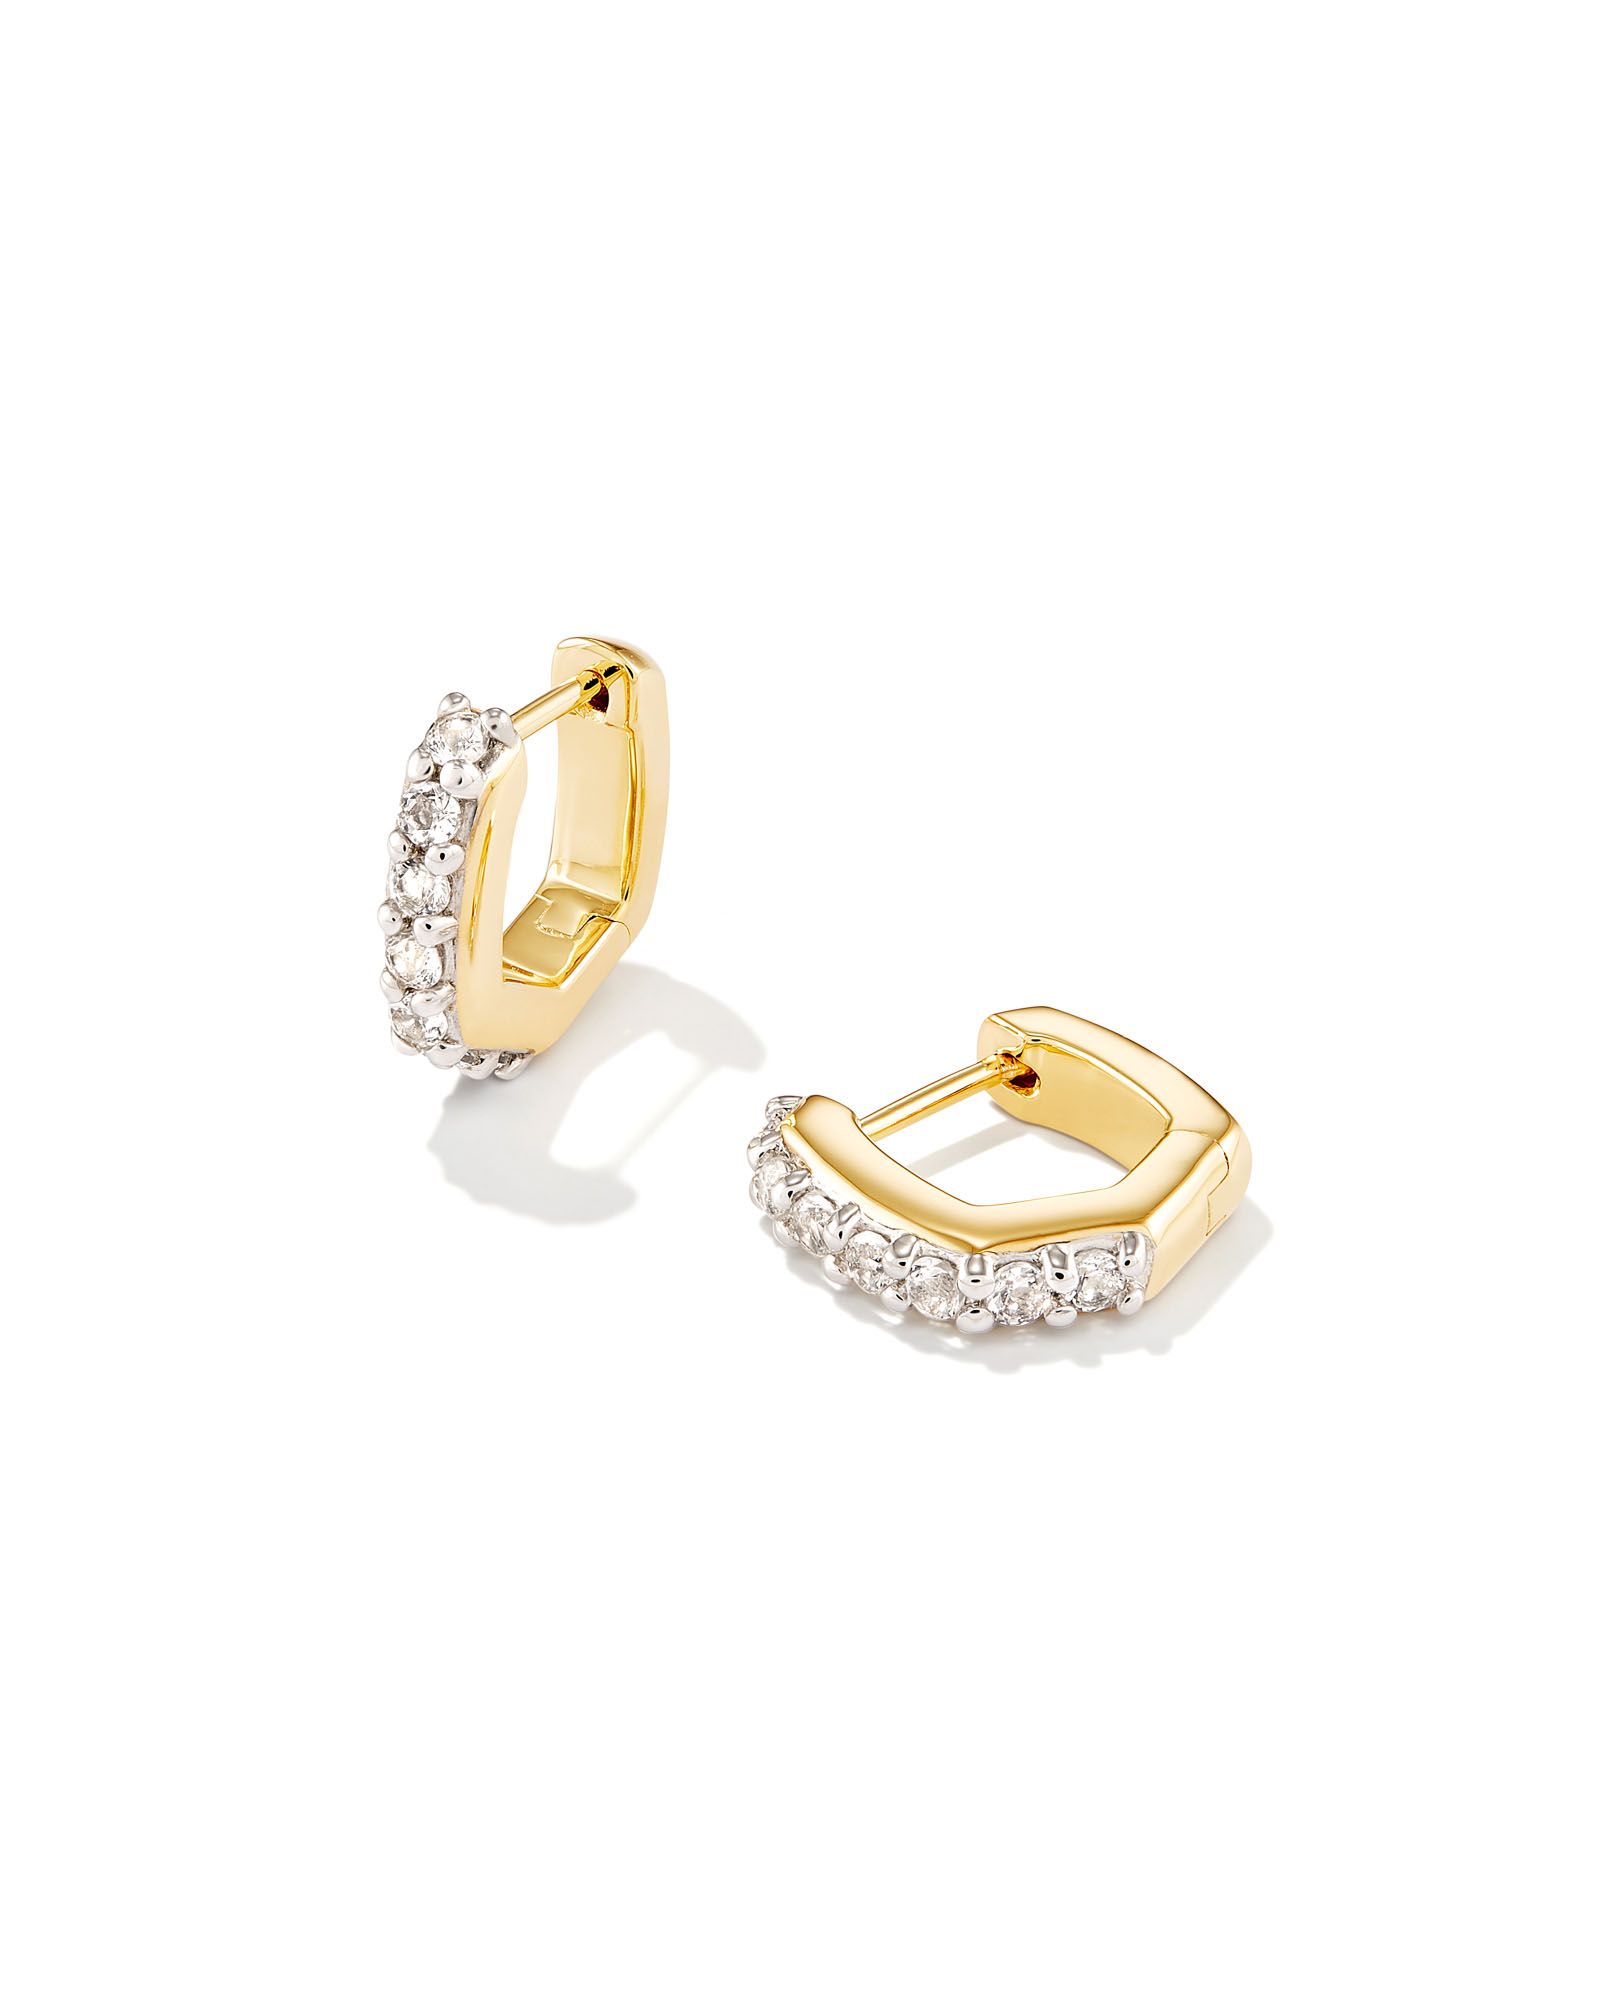 Davie 18k Gold Vermeil Huggie Earrings in White Topaz | Kendra Scott | Kendra Scott